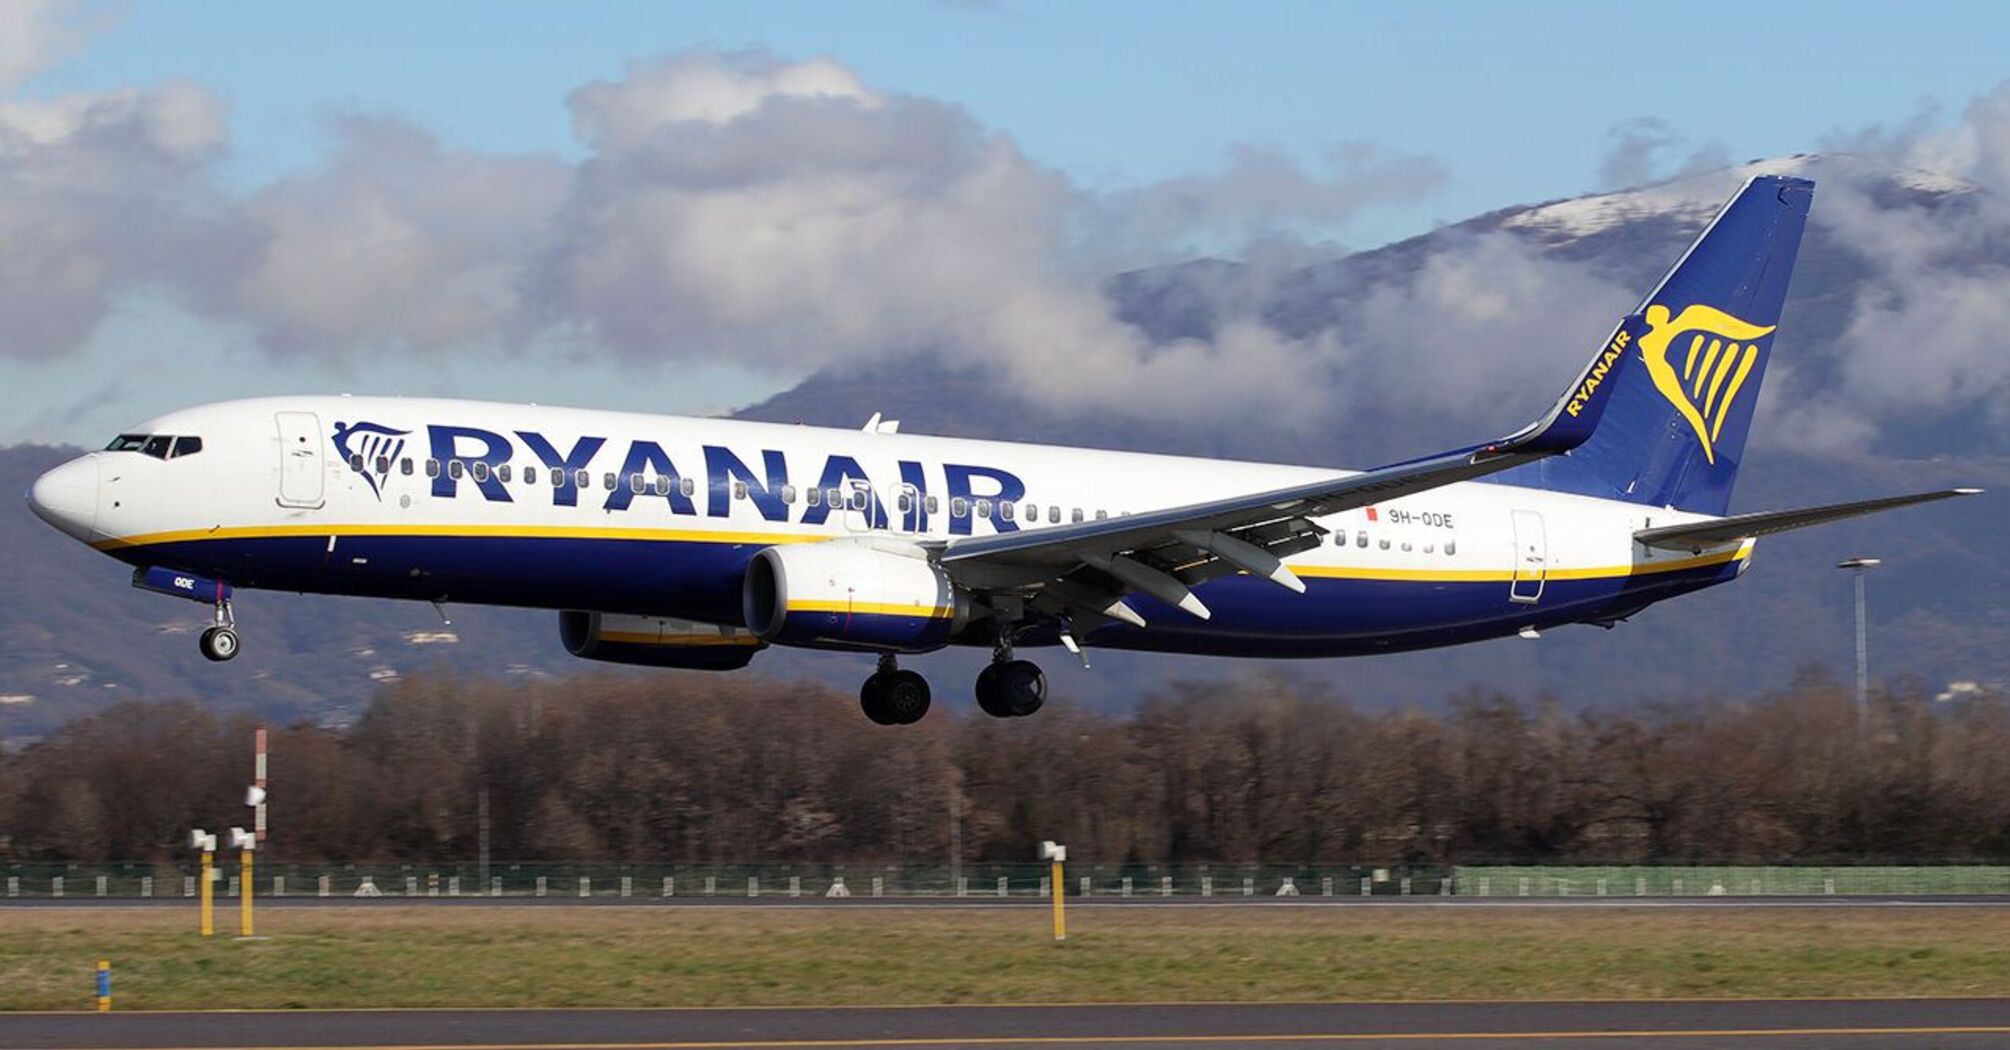 The Ryanair aircraft